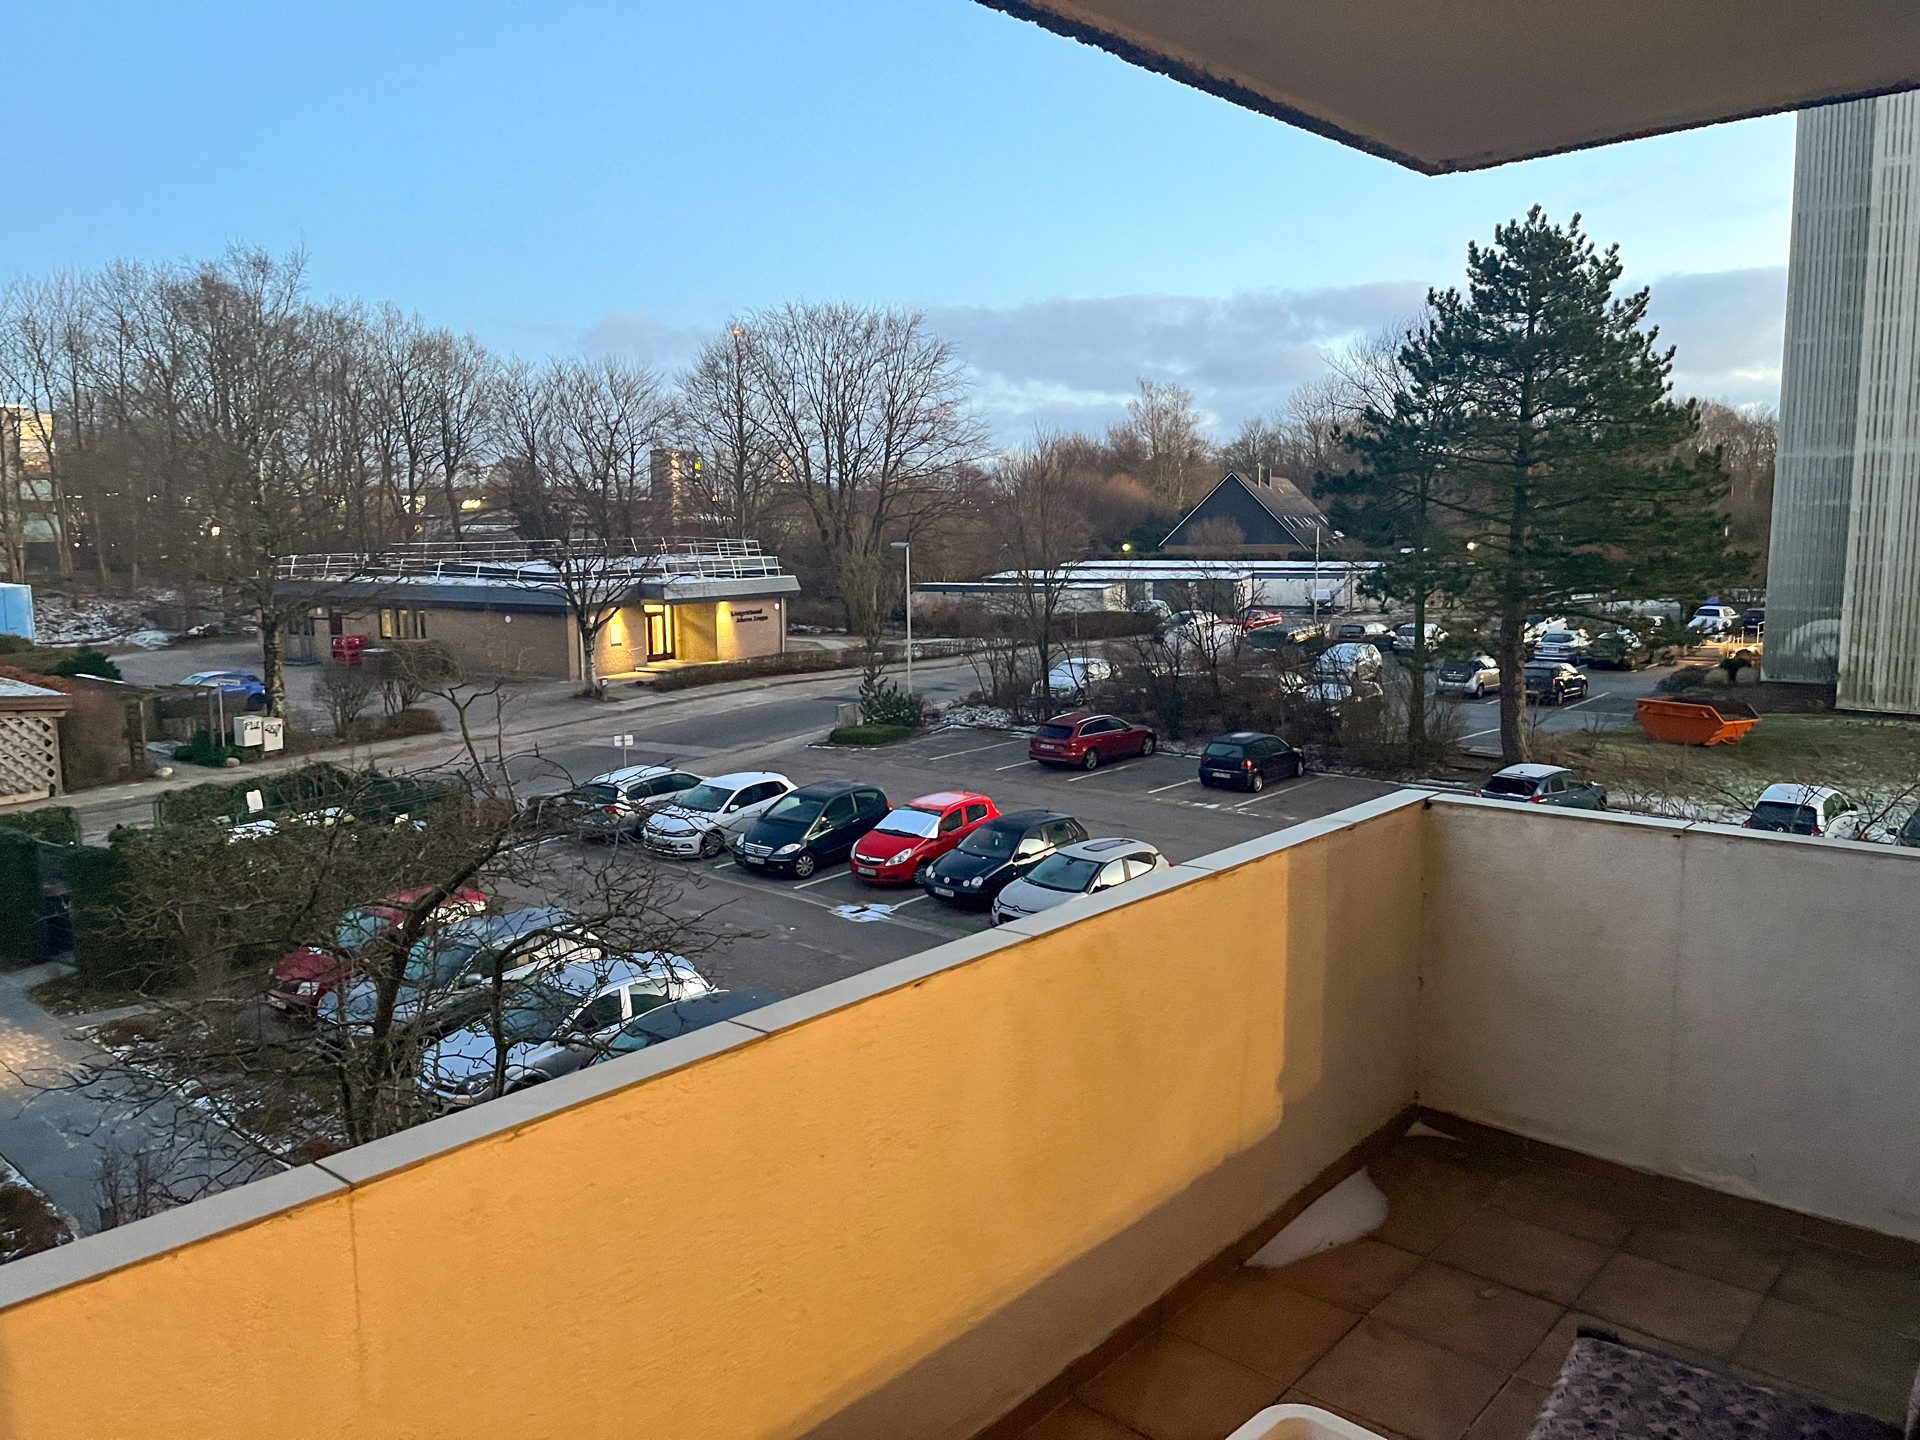 Immobilienangebot - Flensburg - Alle - Flensburg: 2-Zi. Wohnung im 2.OG., mit Aufzug, Keller & Balkon in beliebter Lage!